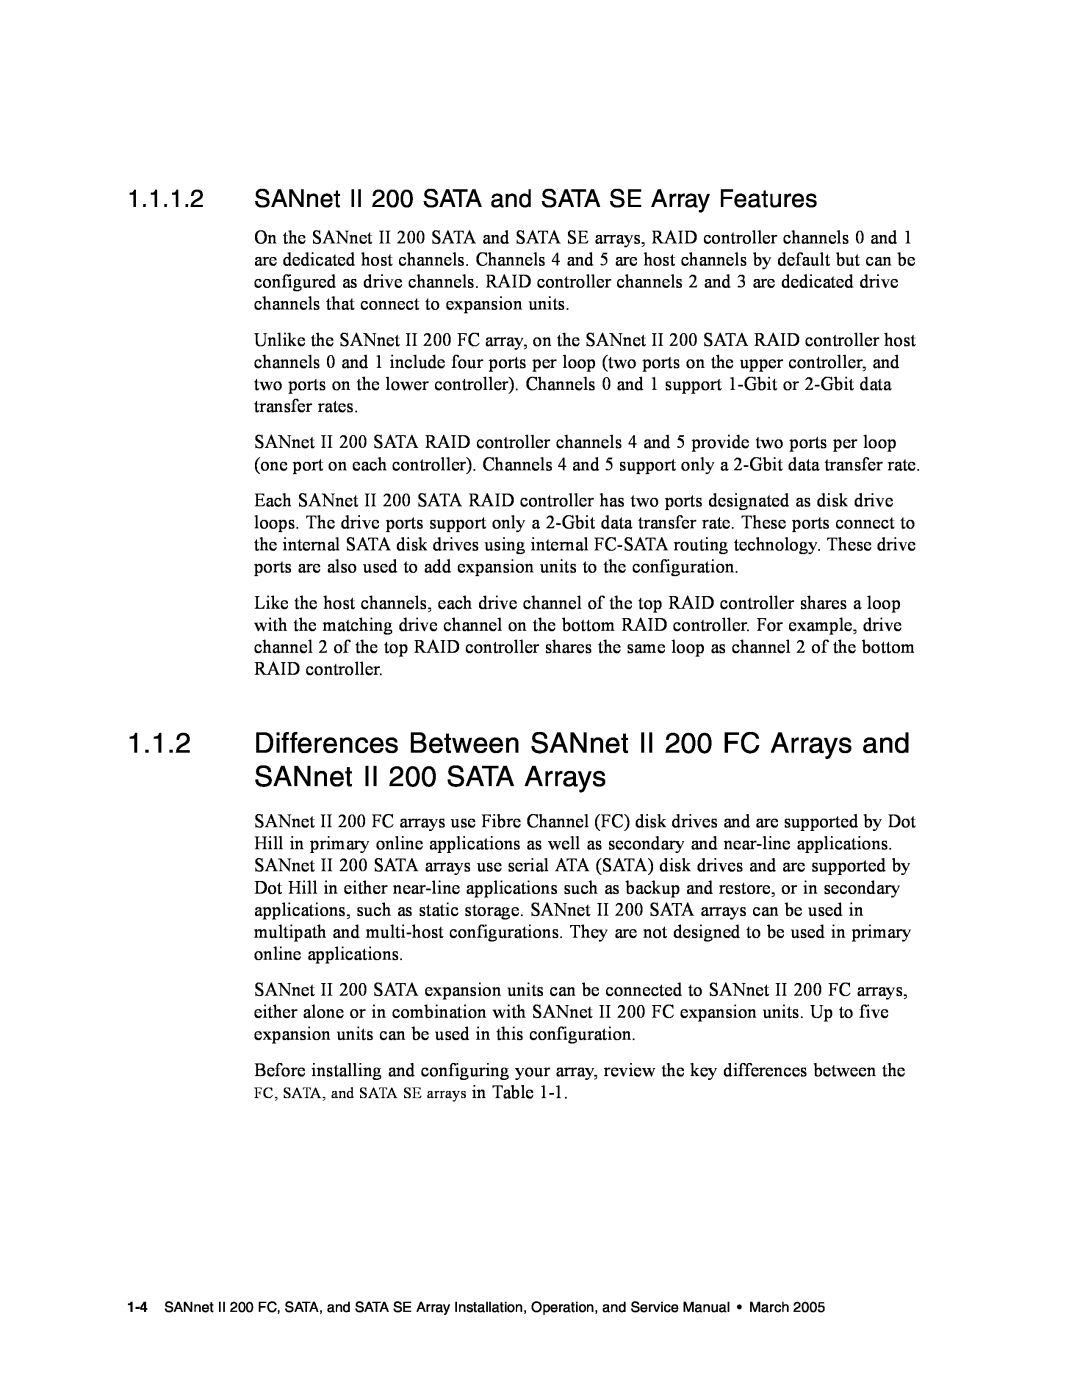 Dot Hill Systems II 200 FC service manual SANnet II 200 SATA and SATA SE Array Features 